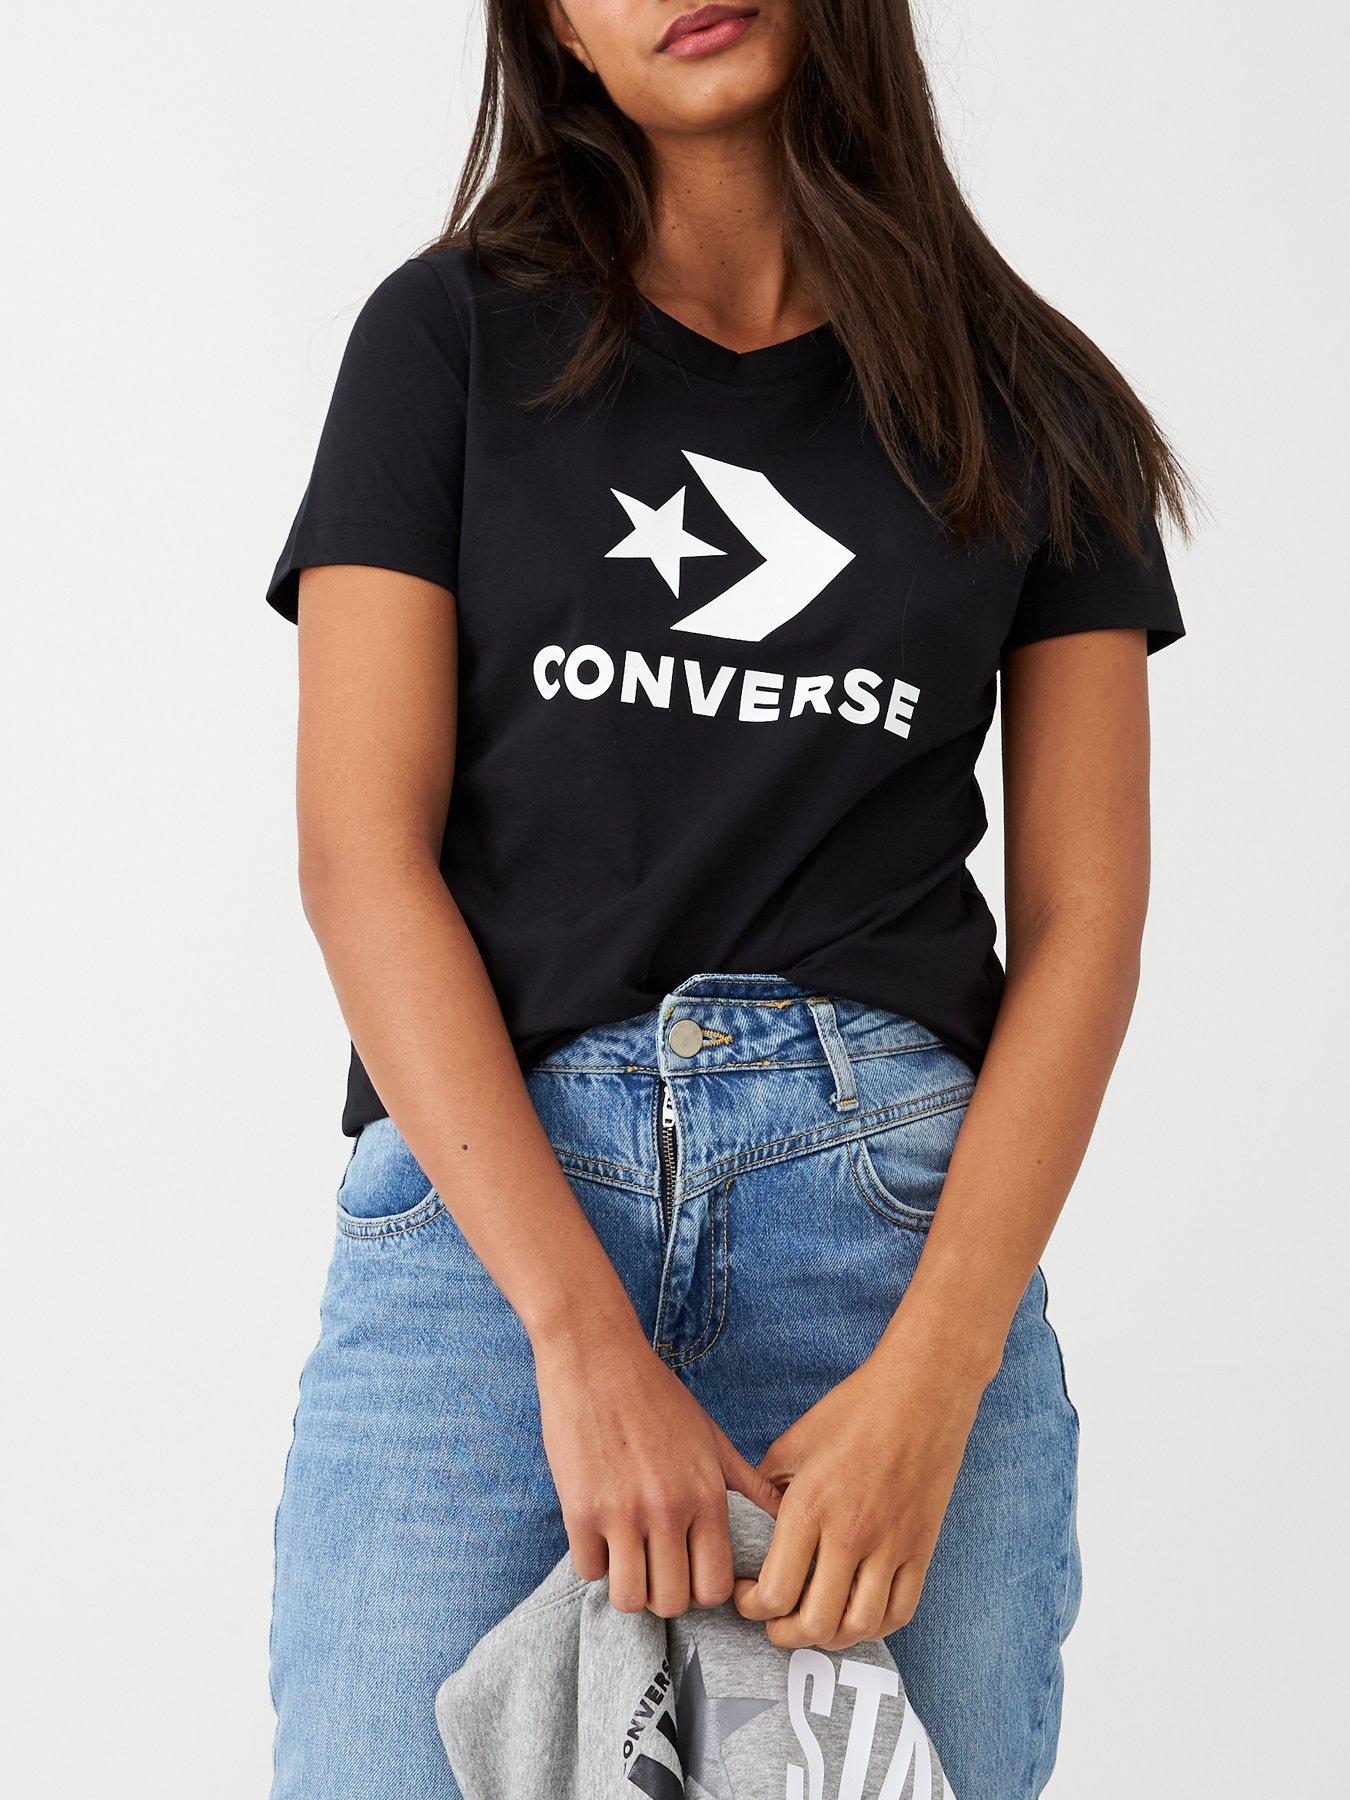 converse shirts womens 